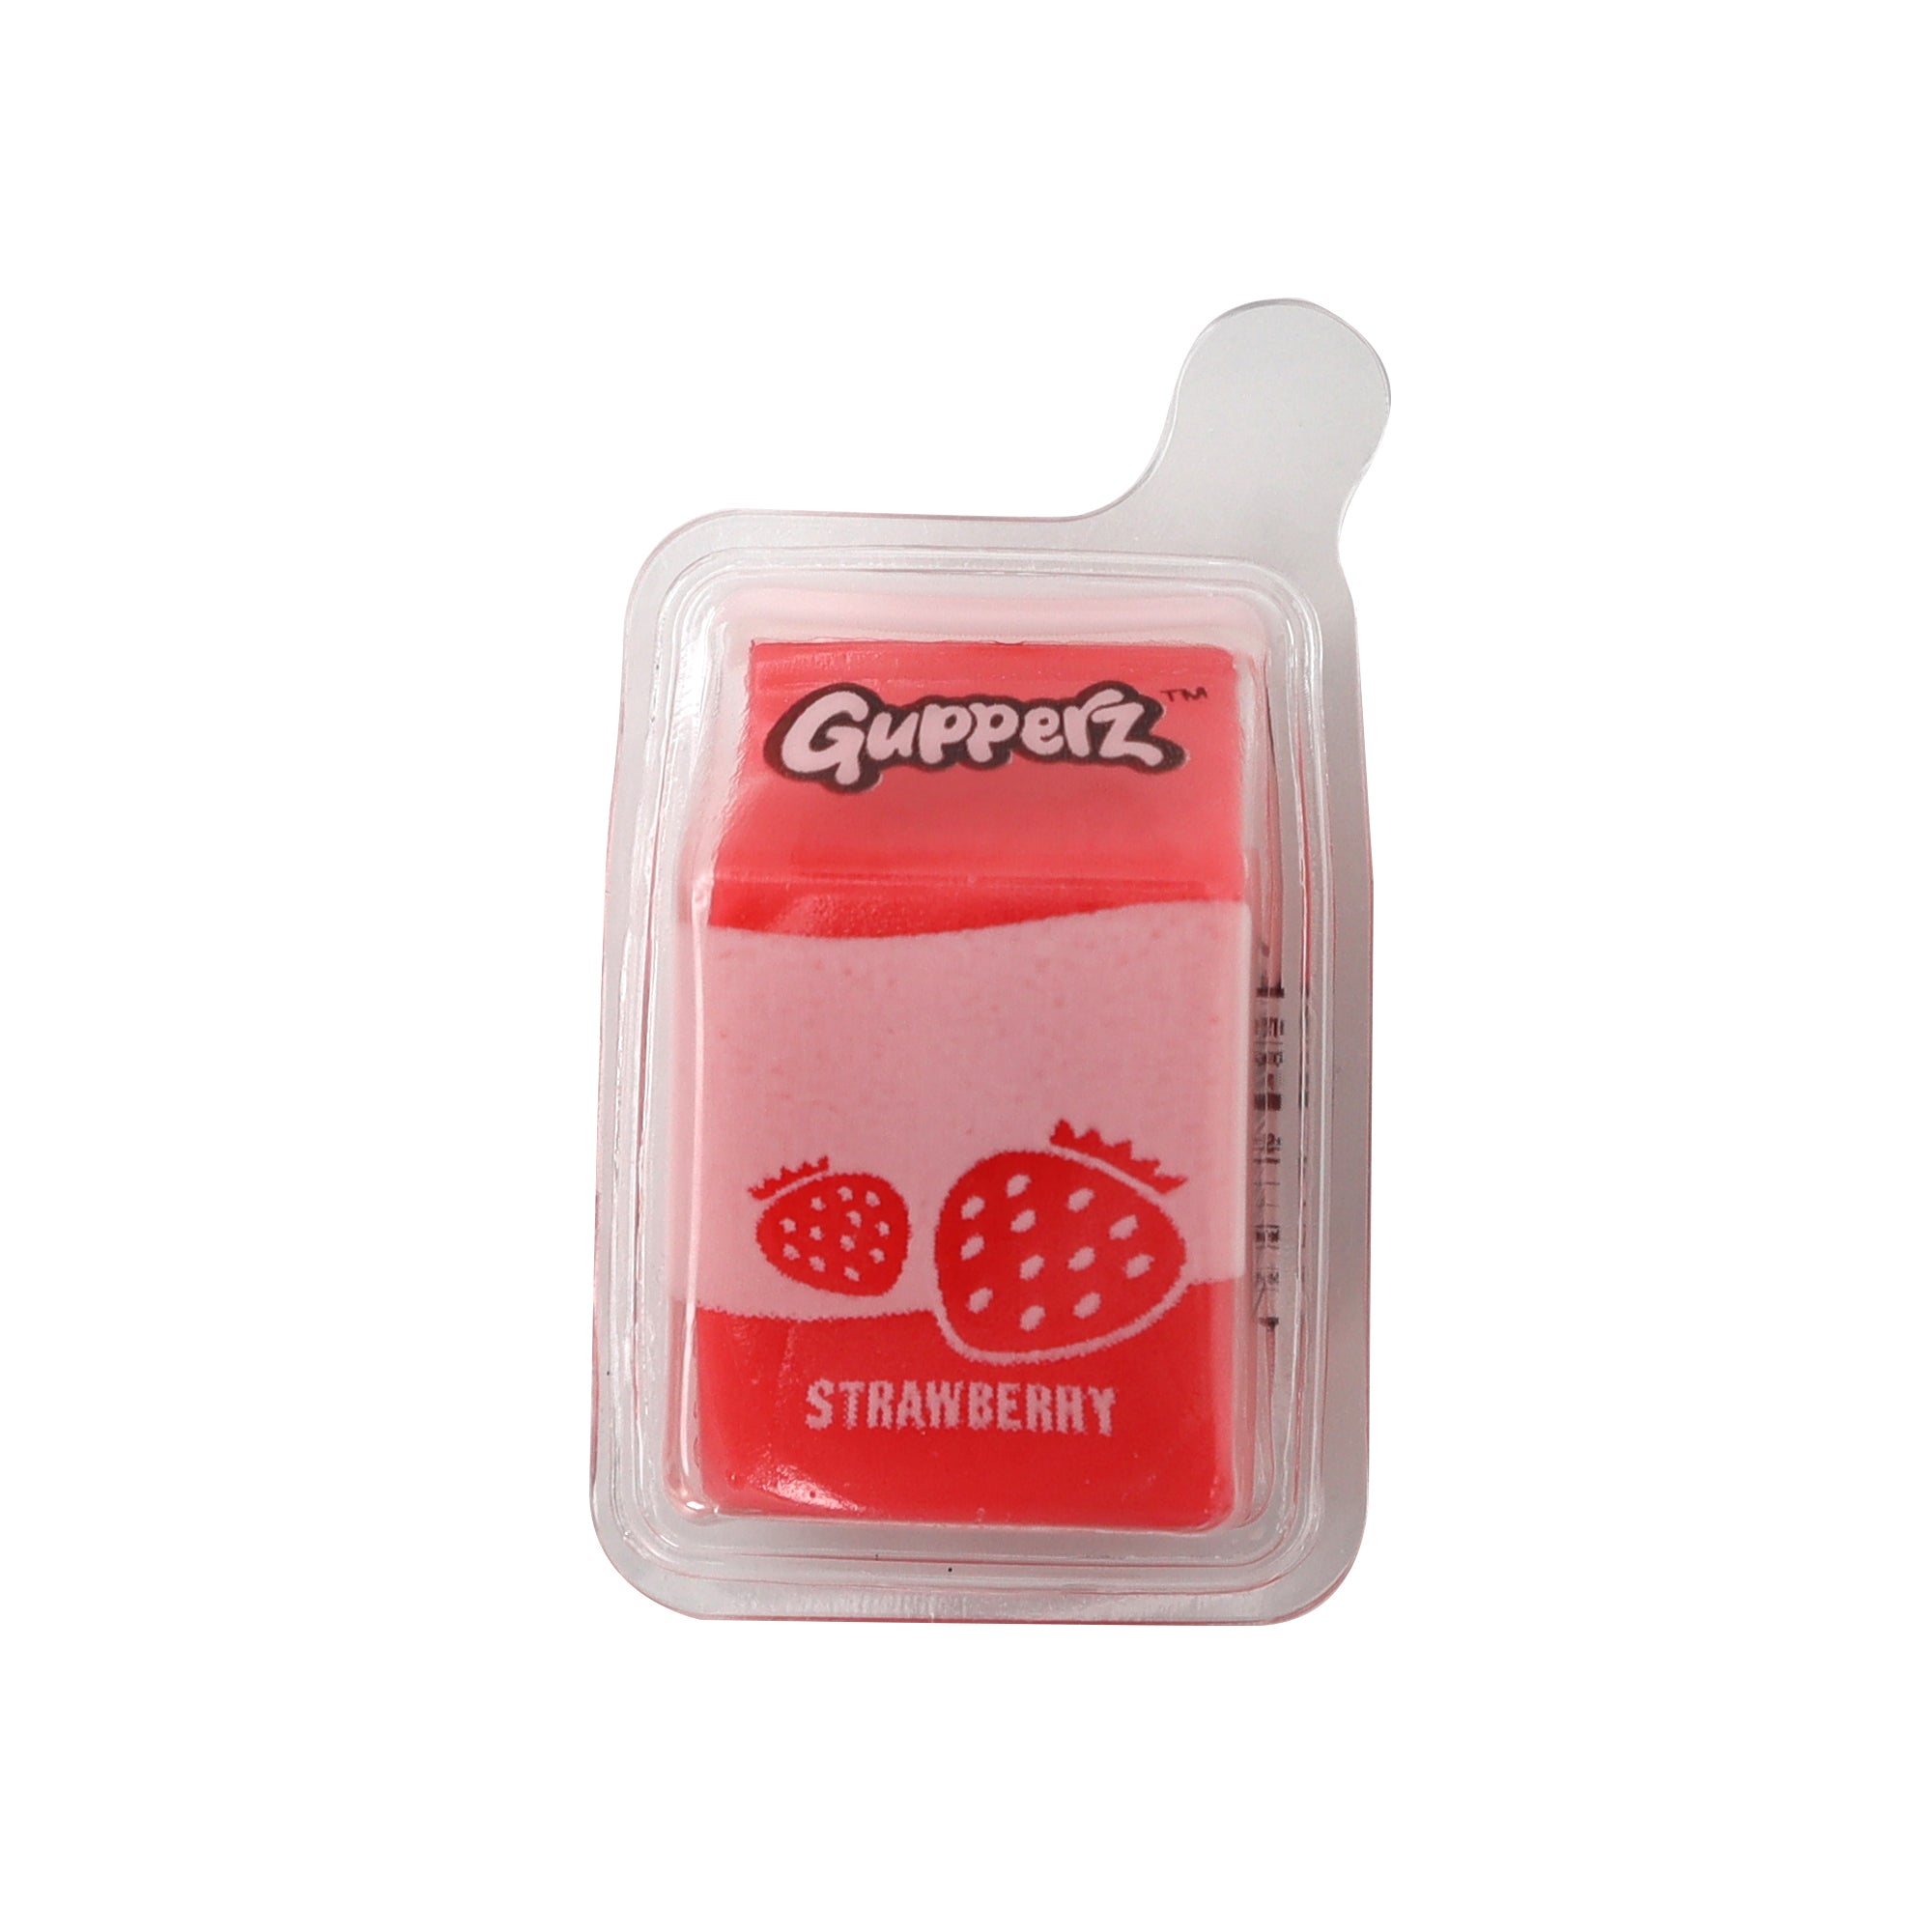 Gupperz Strawberry Milk Splash 2.54oz (Box Of 6 Bags)